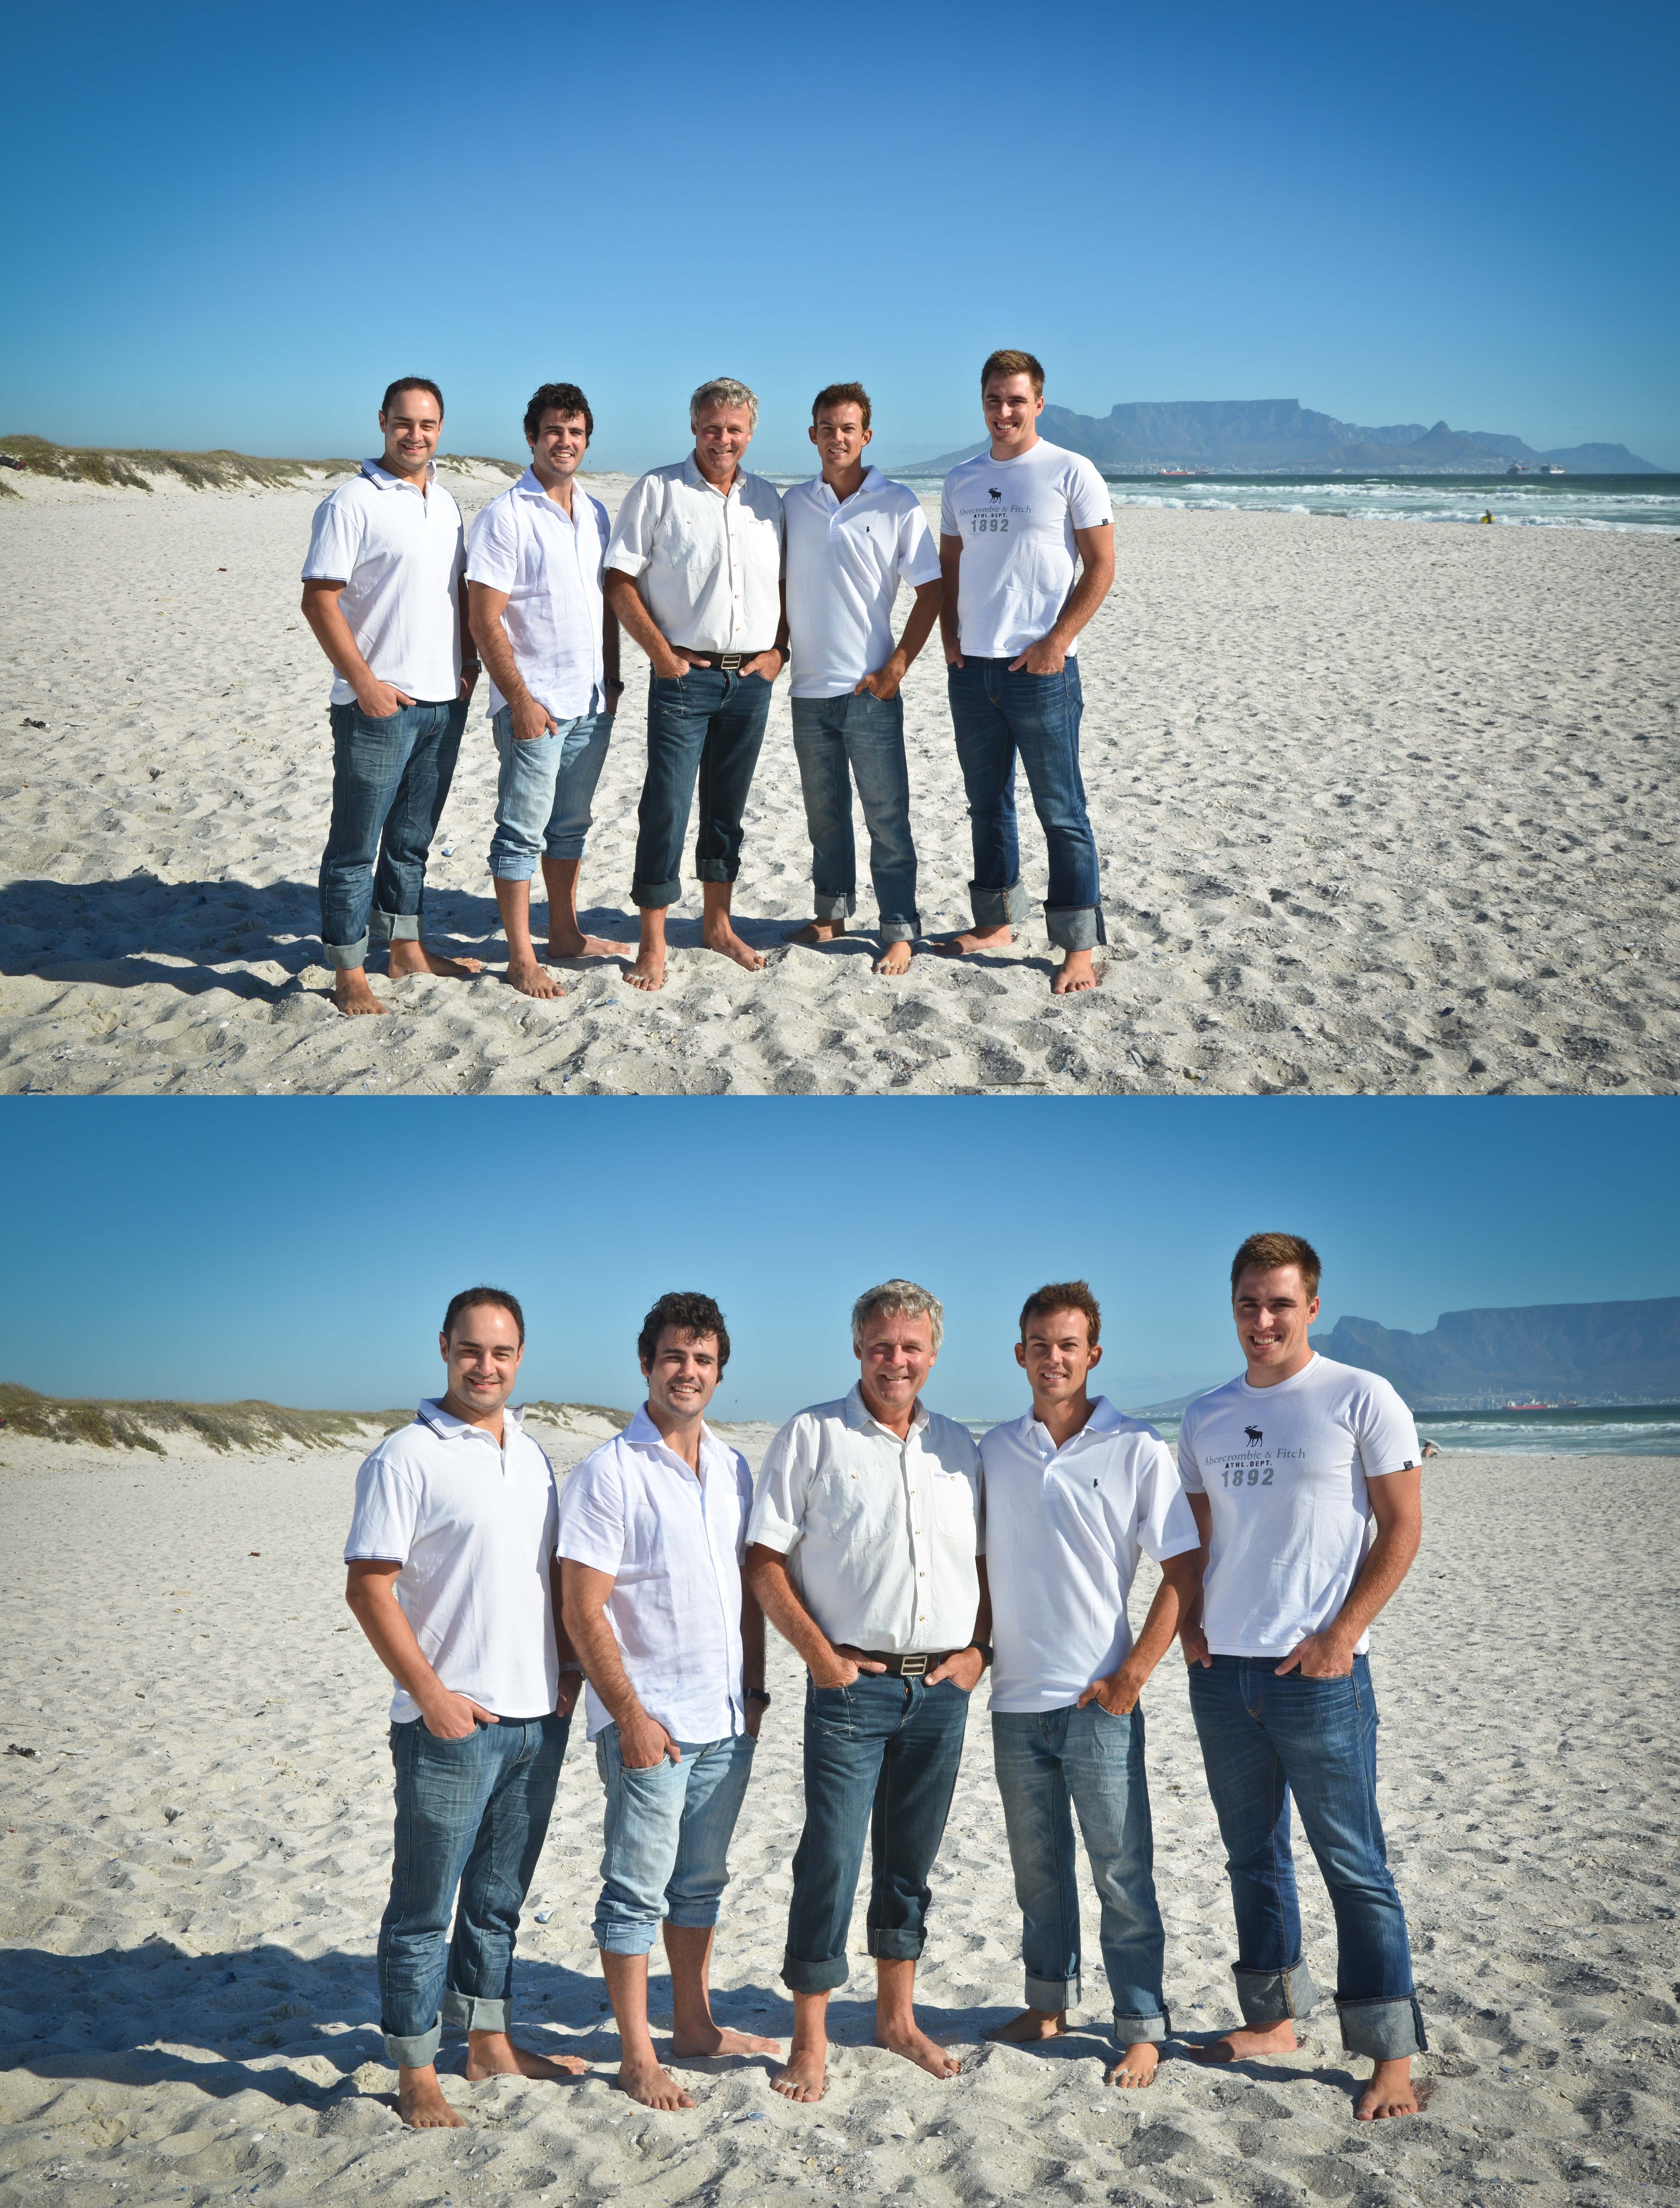 Jeans & White shirts on beach | Photo poses | Pinterest | Beach ...